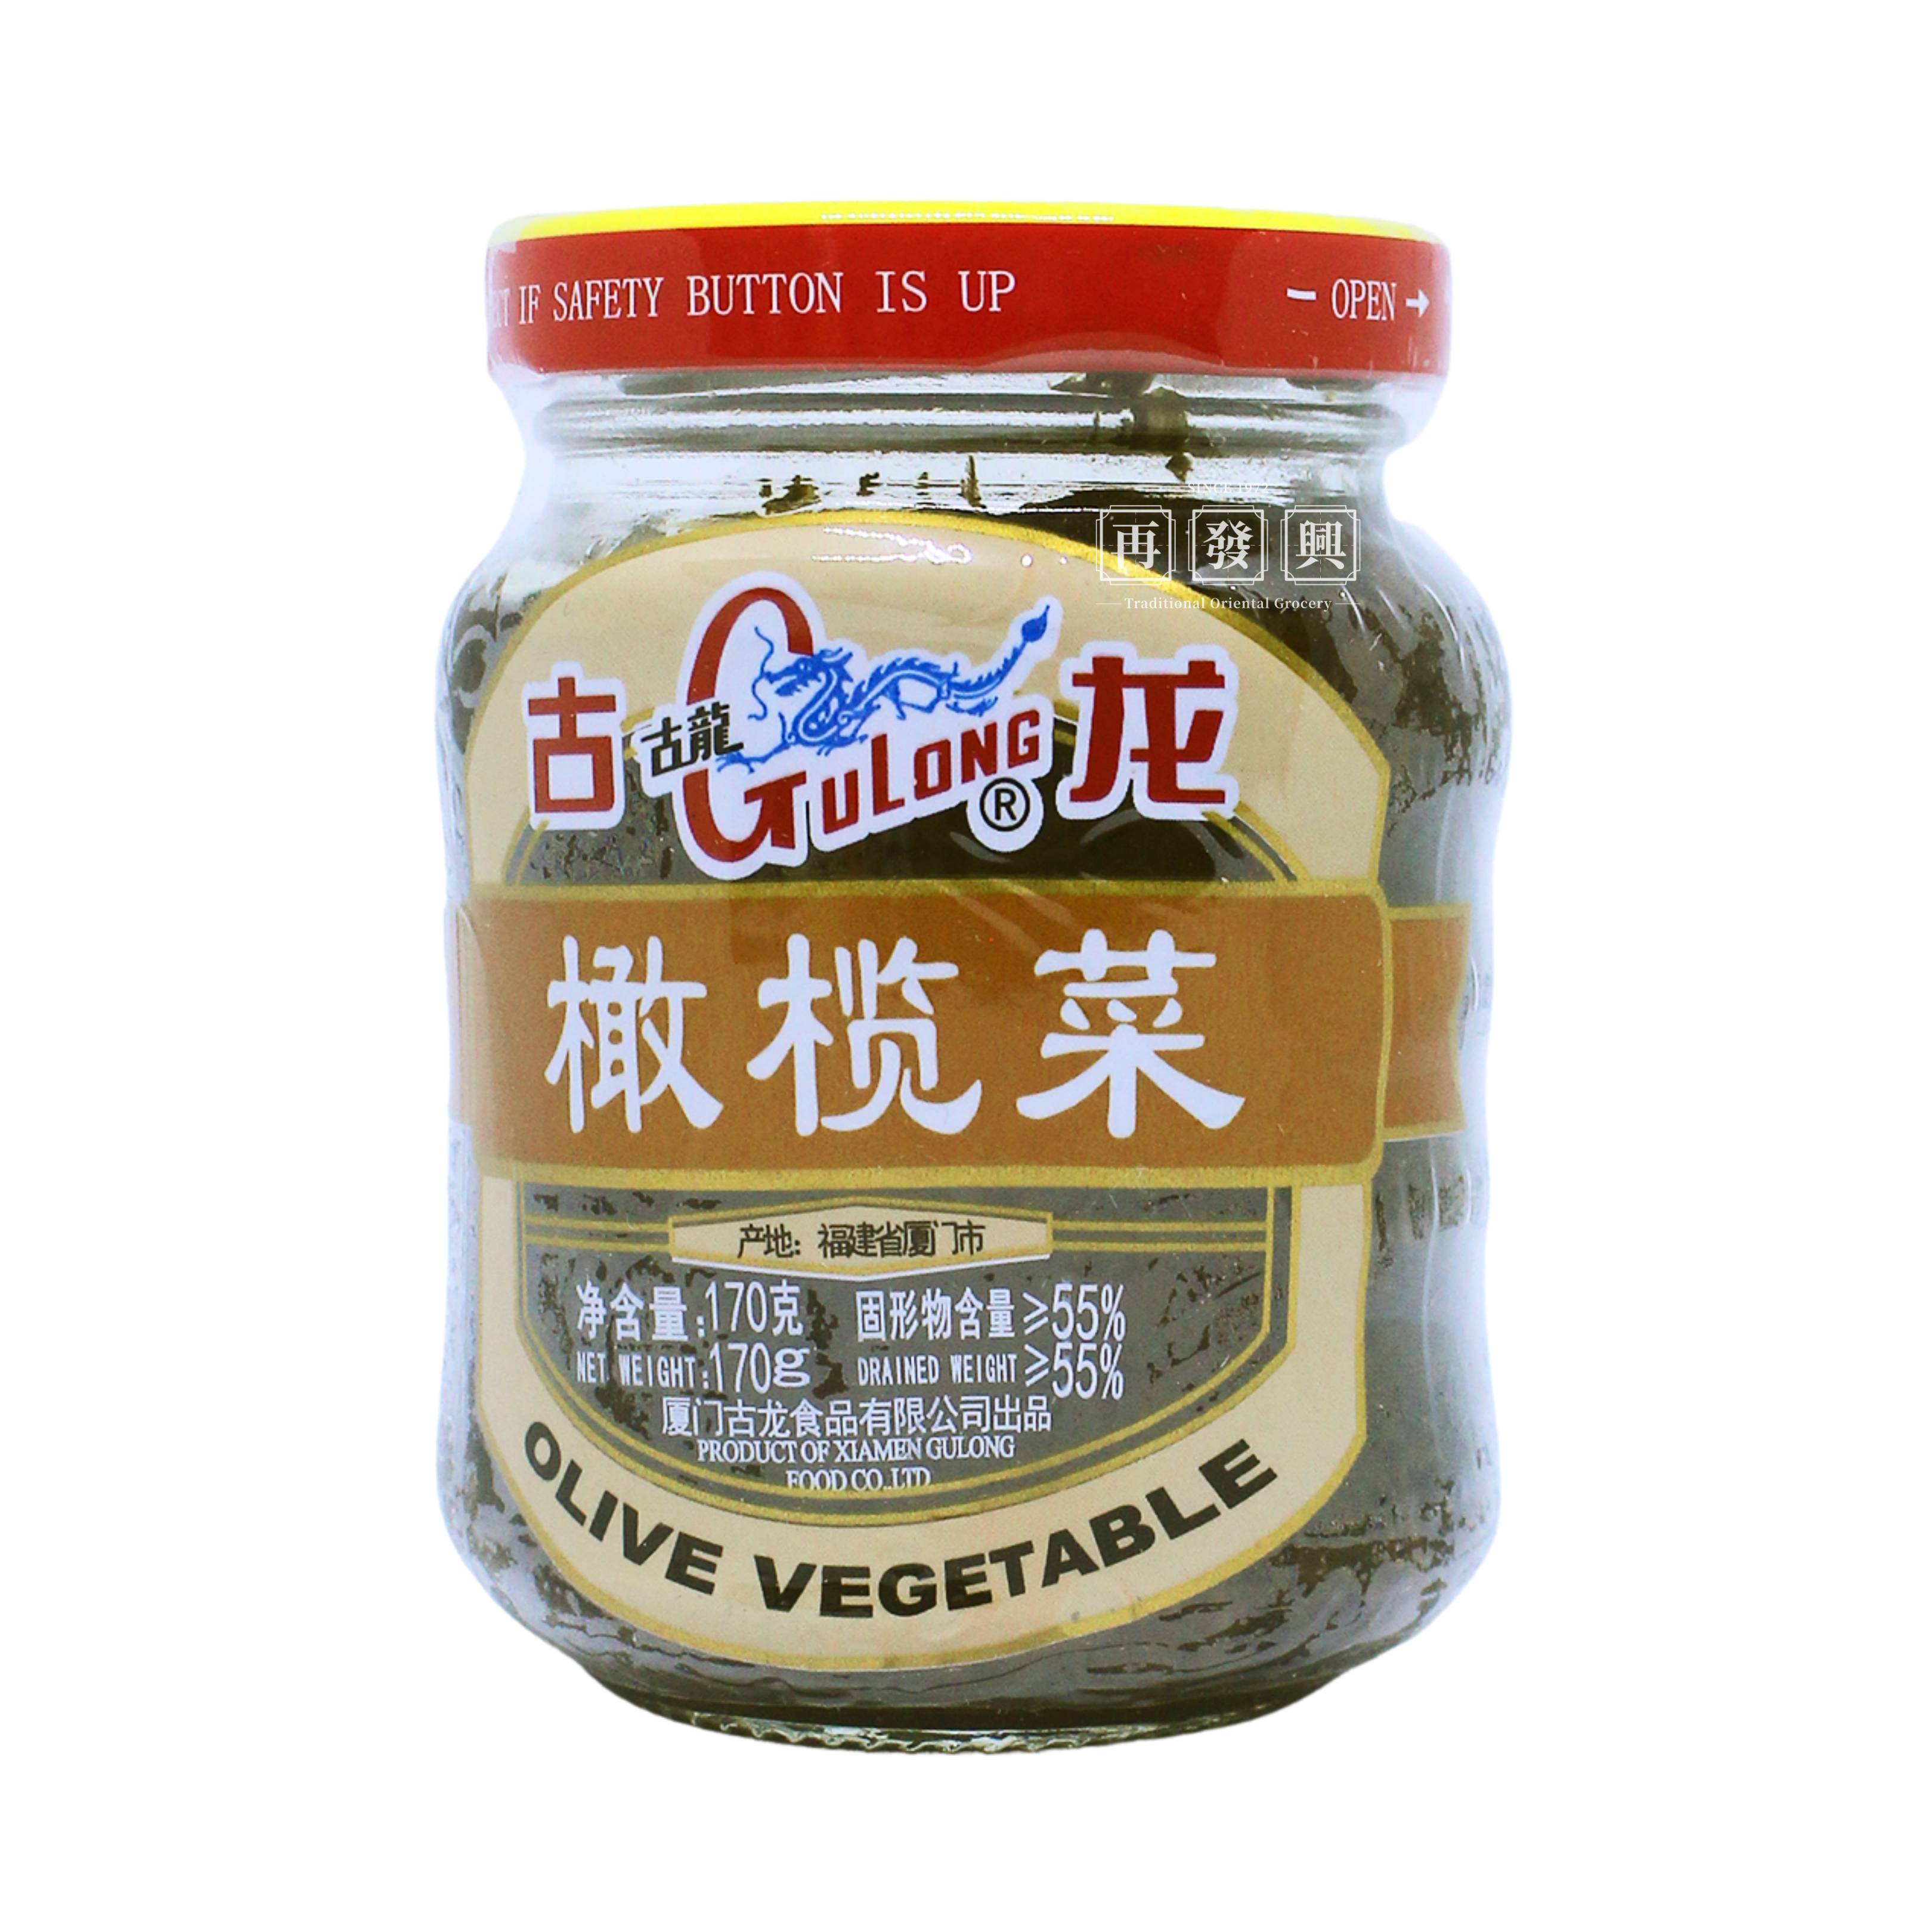 GuLong Olive Vegetable 古龙橄榄菜 170g